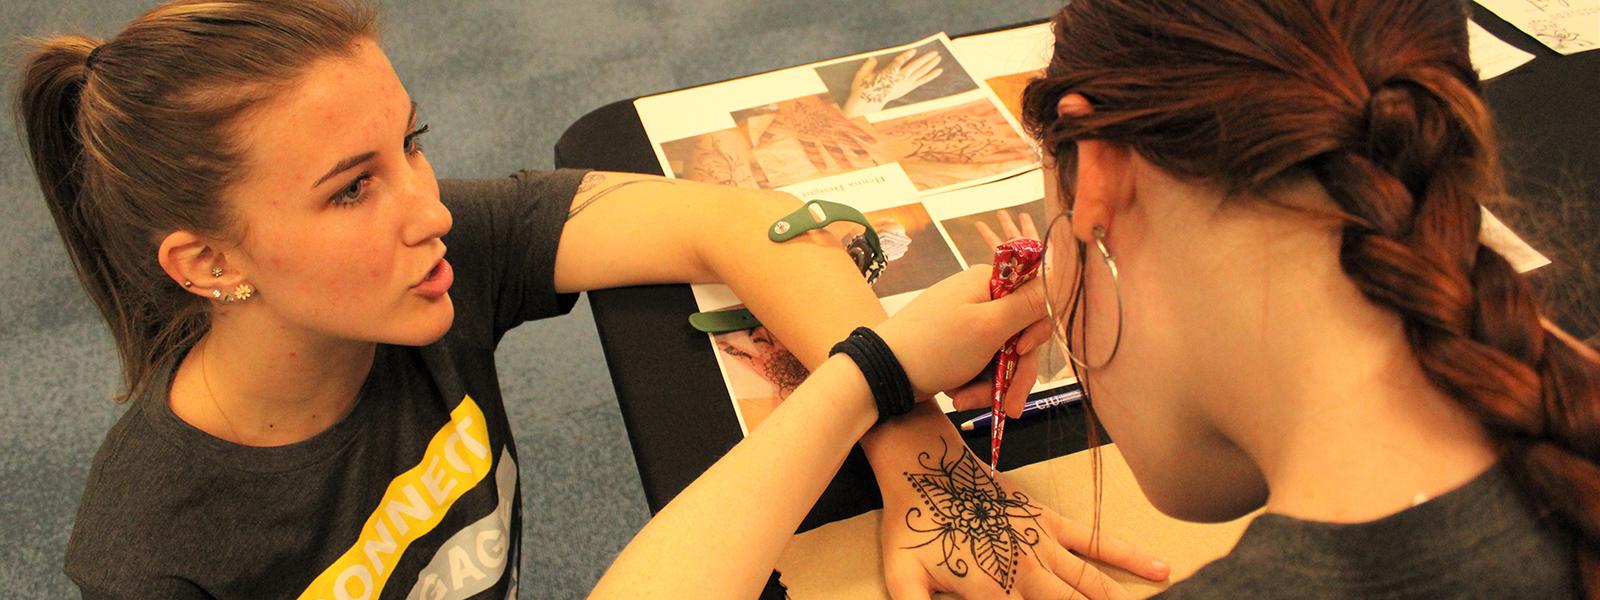 CIU student Lena Ryberg is the recipient of the henna artwork of fellow student Christina Lambert. (Photo by Andrea Calamaro, CIU student photographer)